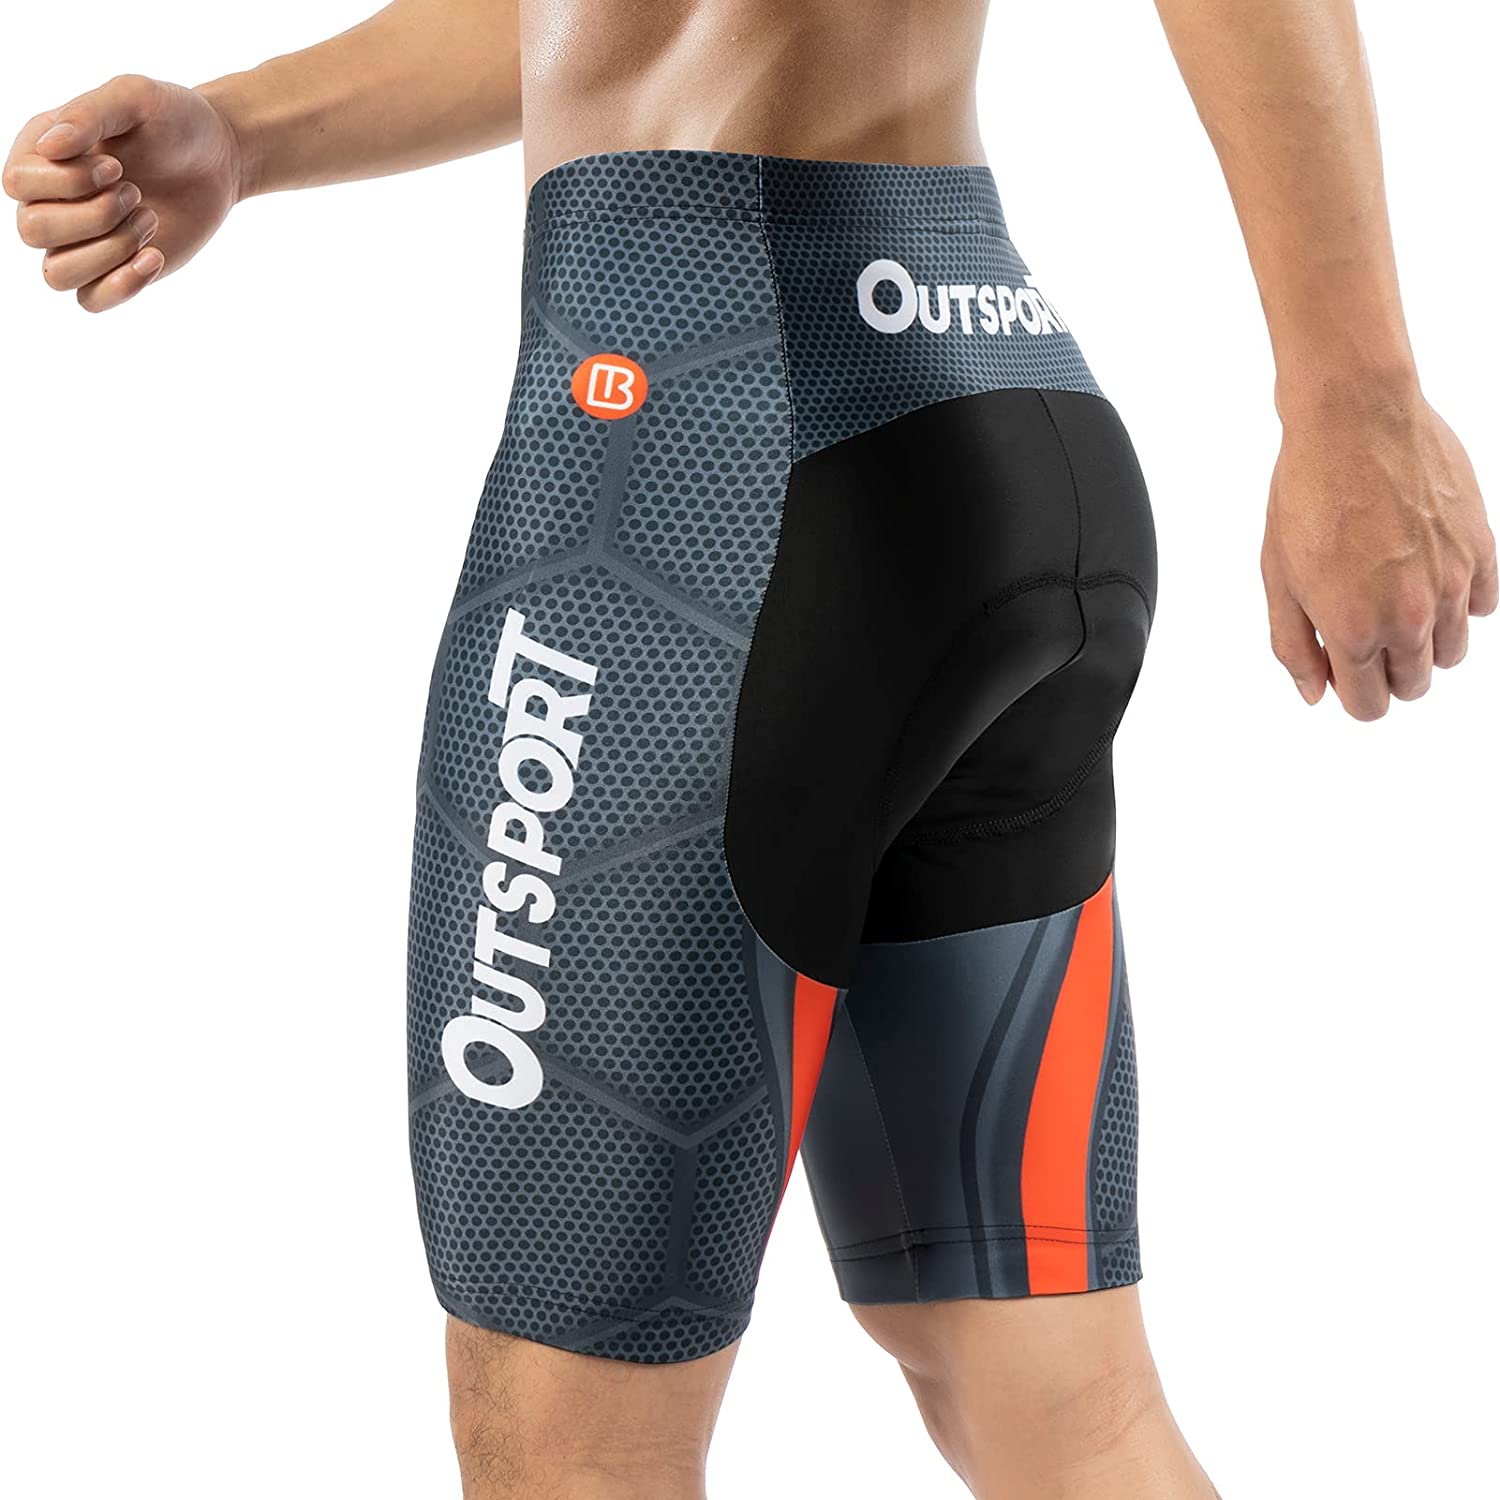 Hiauspor Biking Shorts for Men 4D Padded Big Pockets Bike Cycling Shorts  Quick-Dry